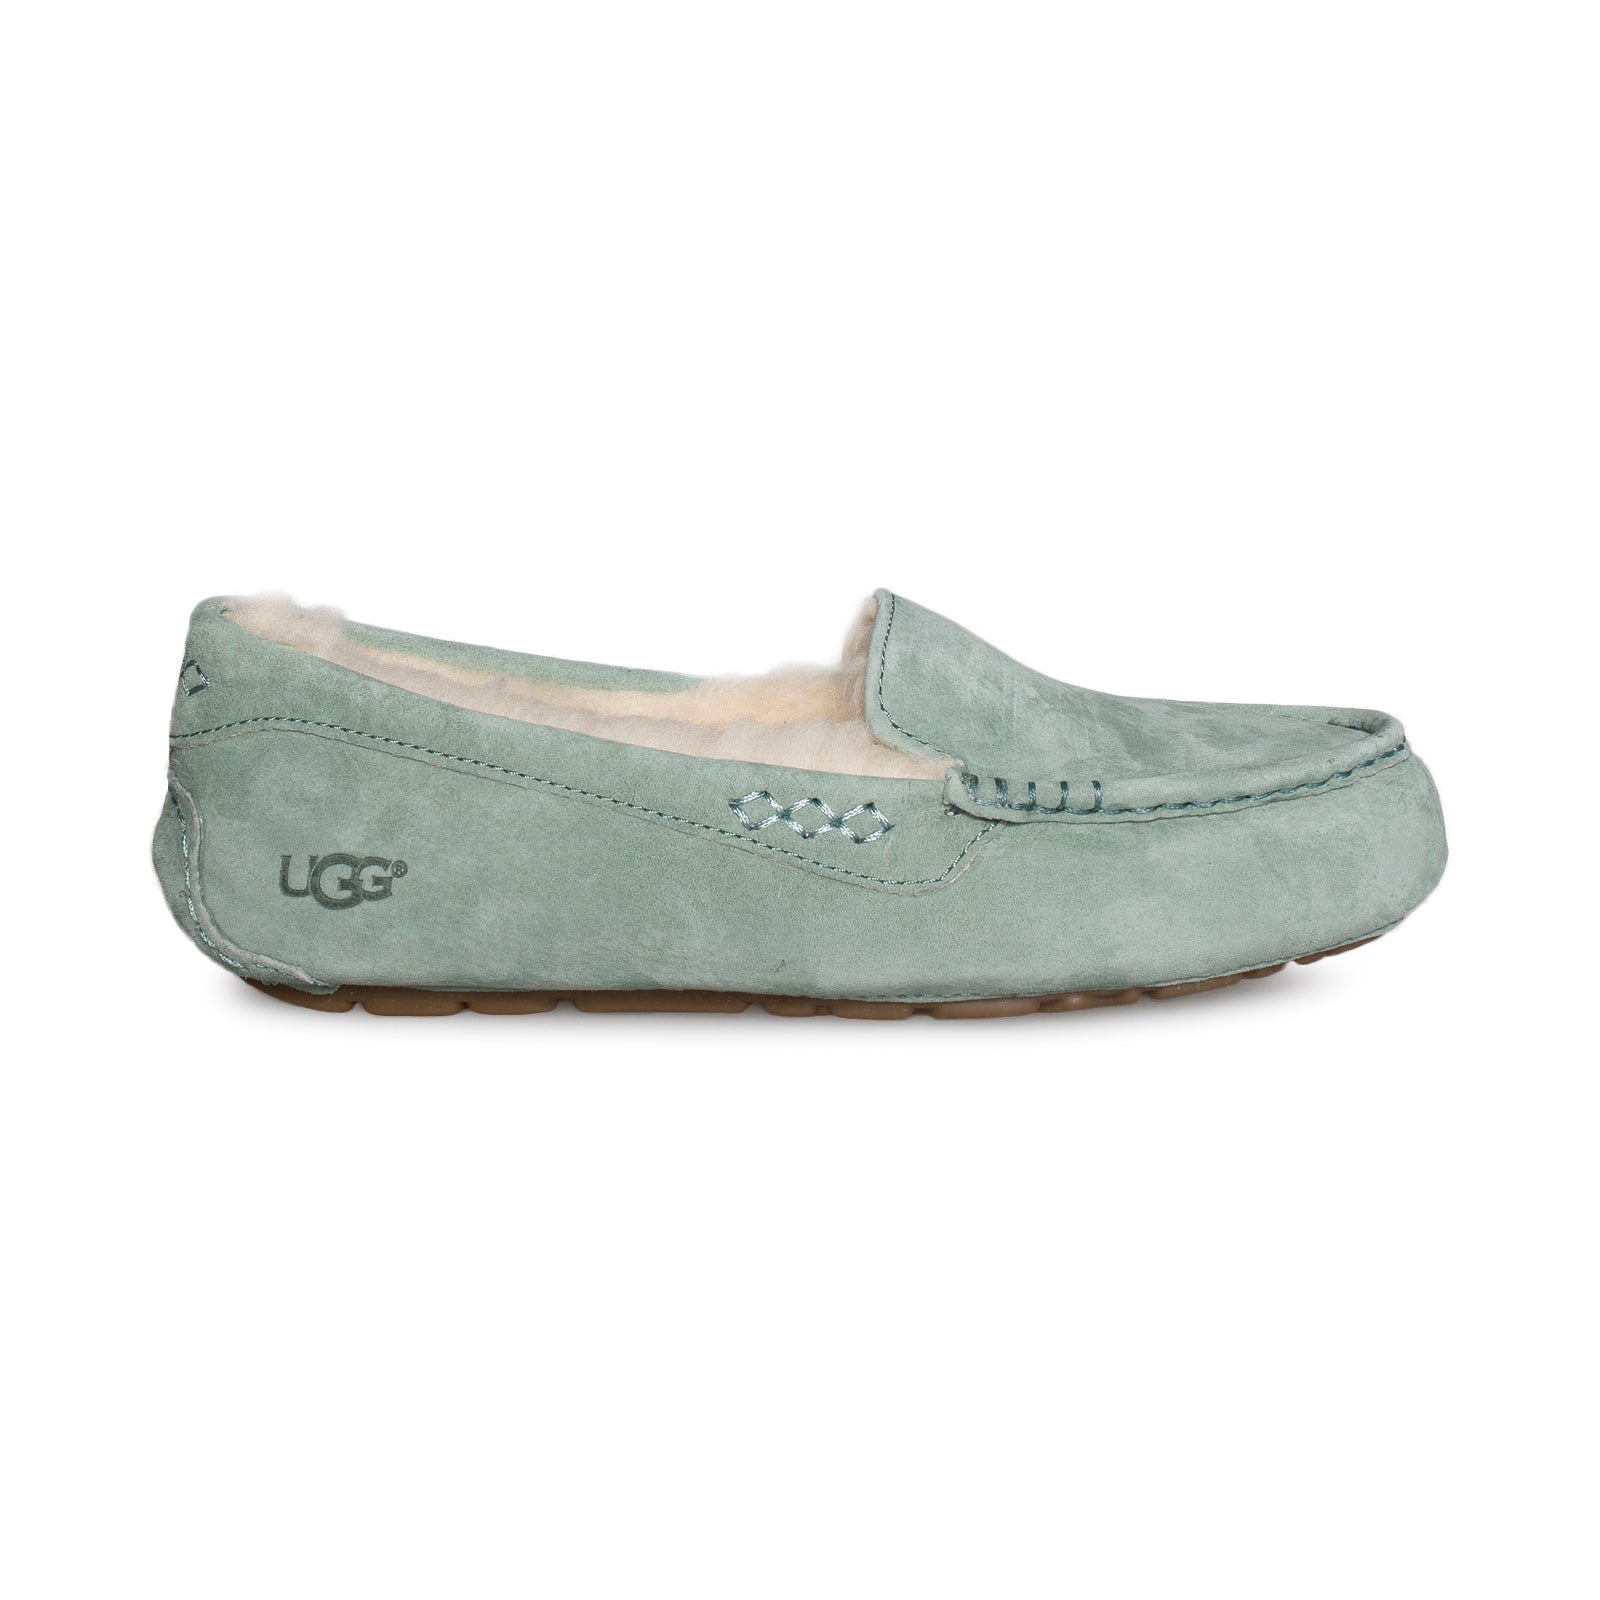 ugg ansley slippers sea green